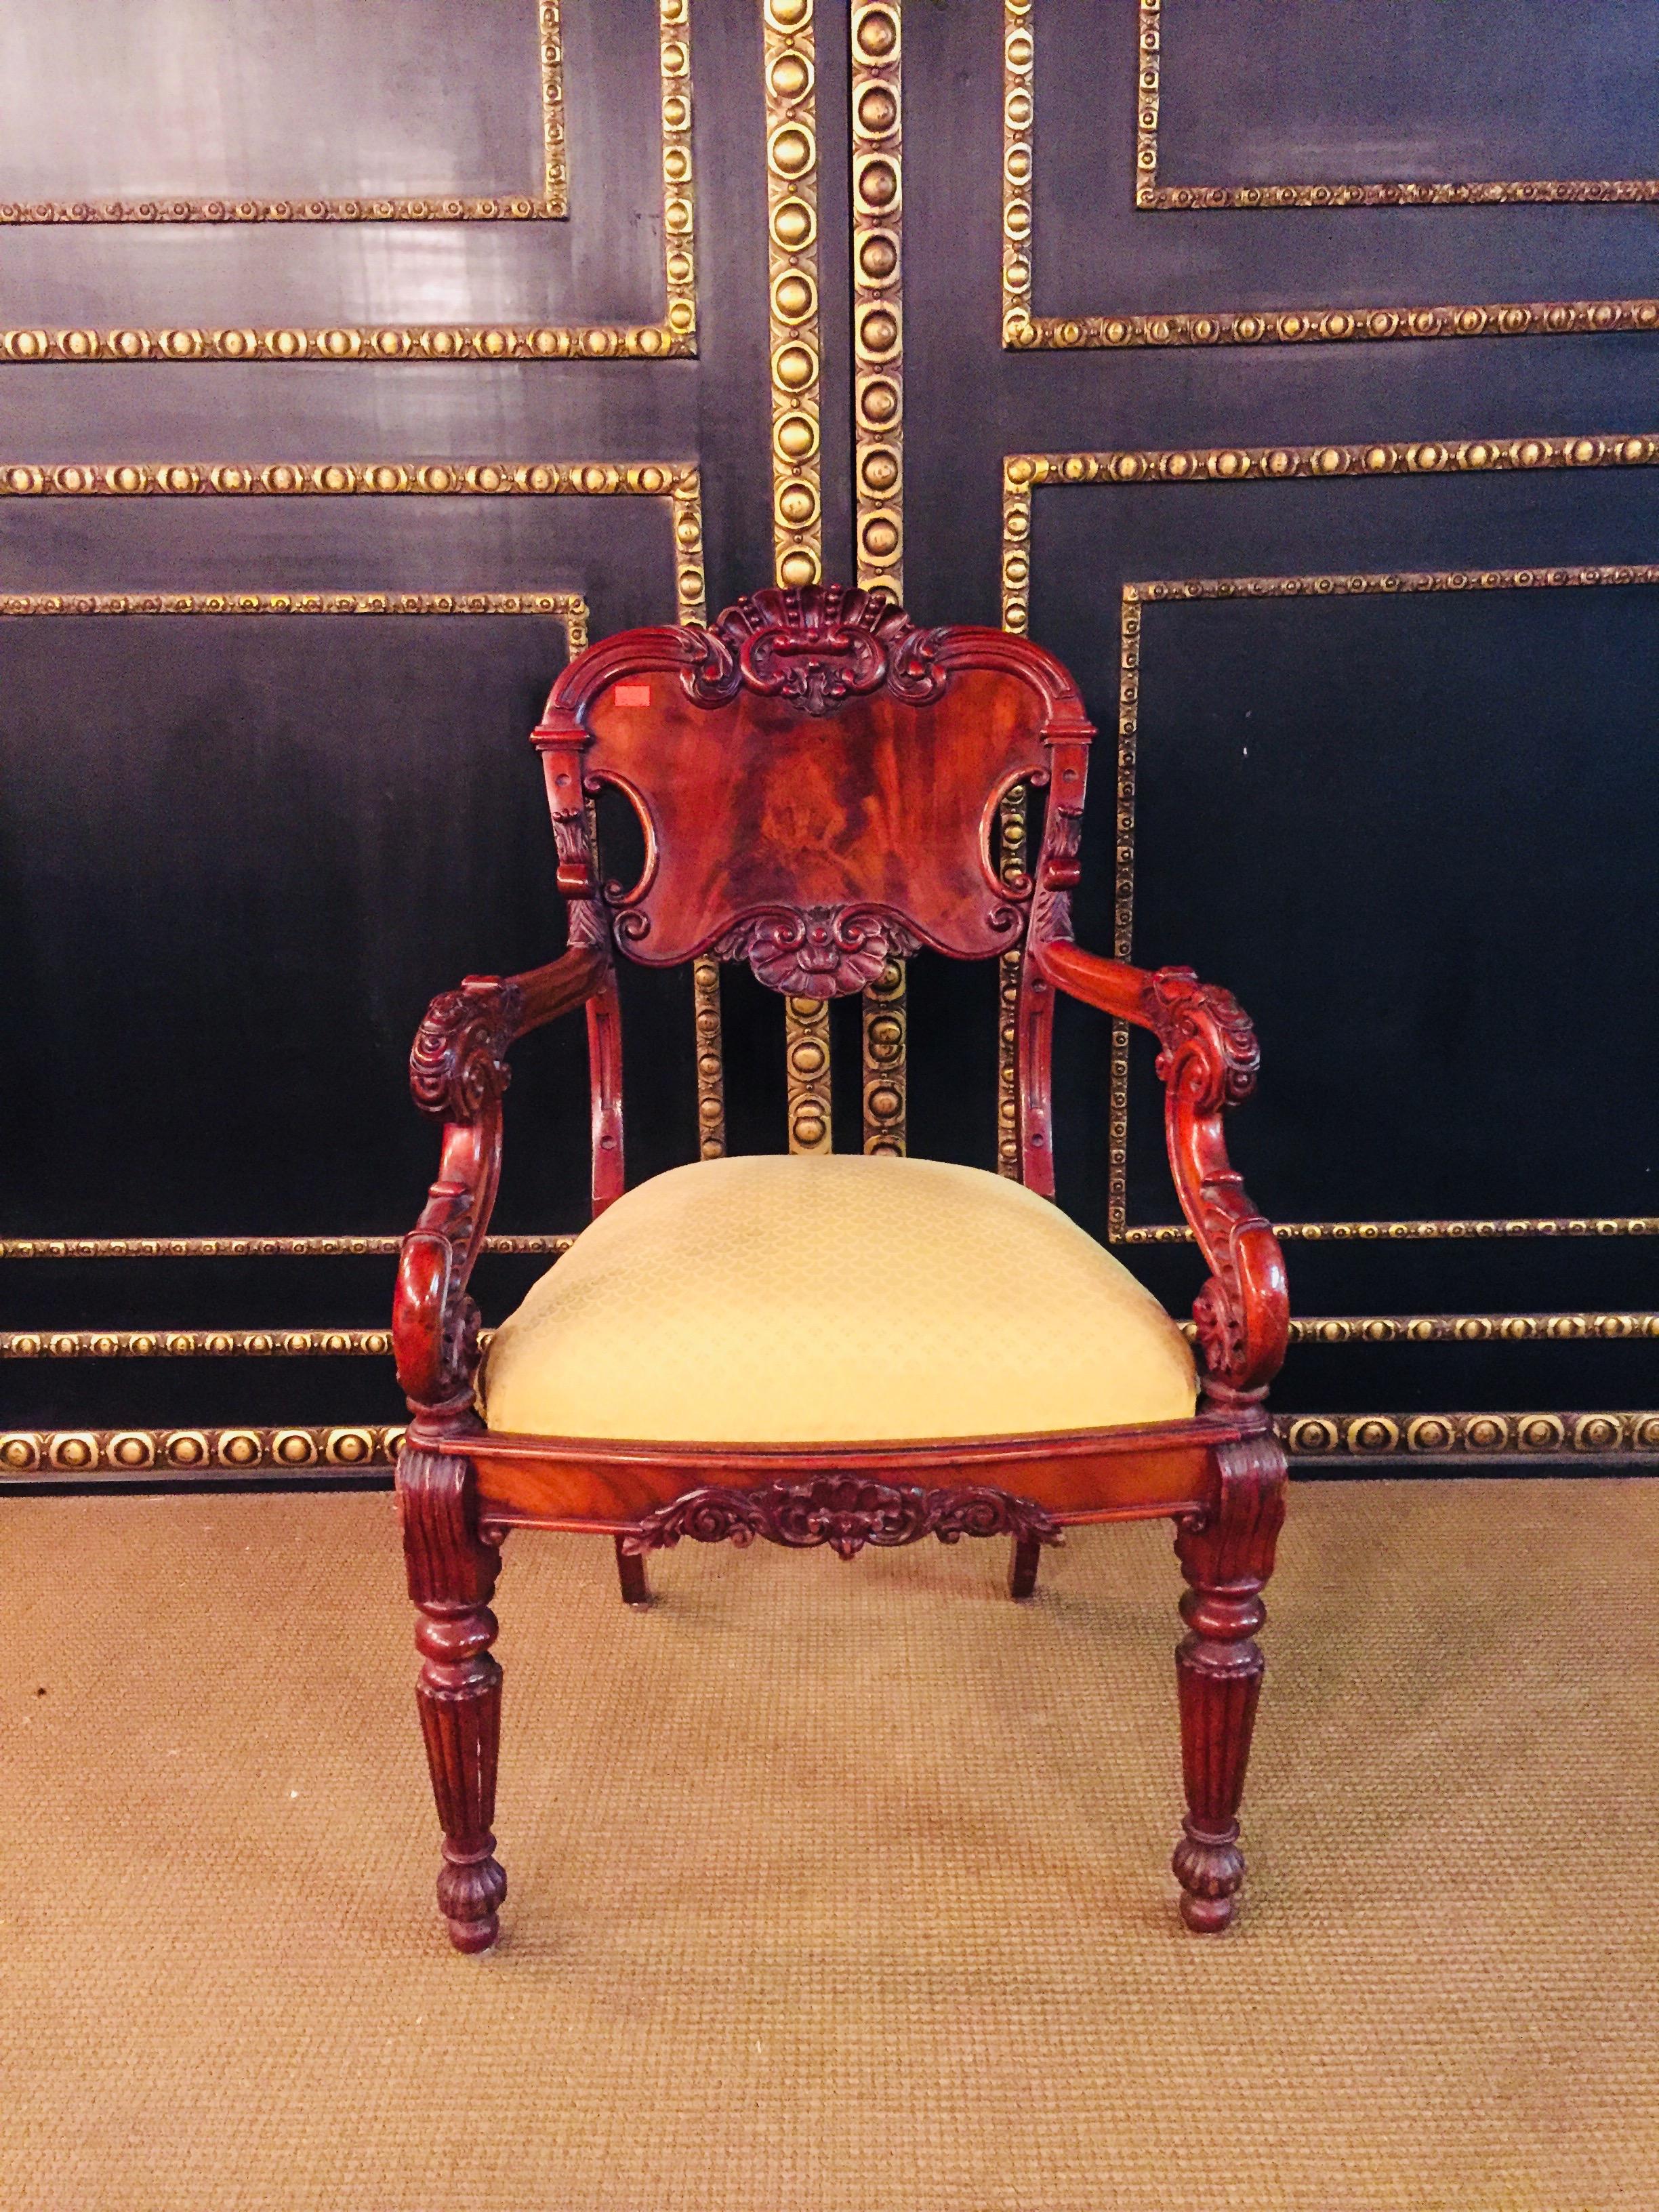 19th Century High-Quality Armchair, Russia circa 1830 Solid Mahogany